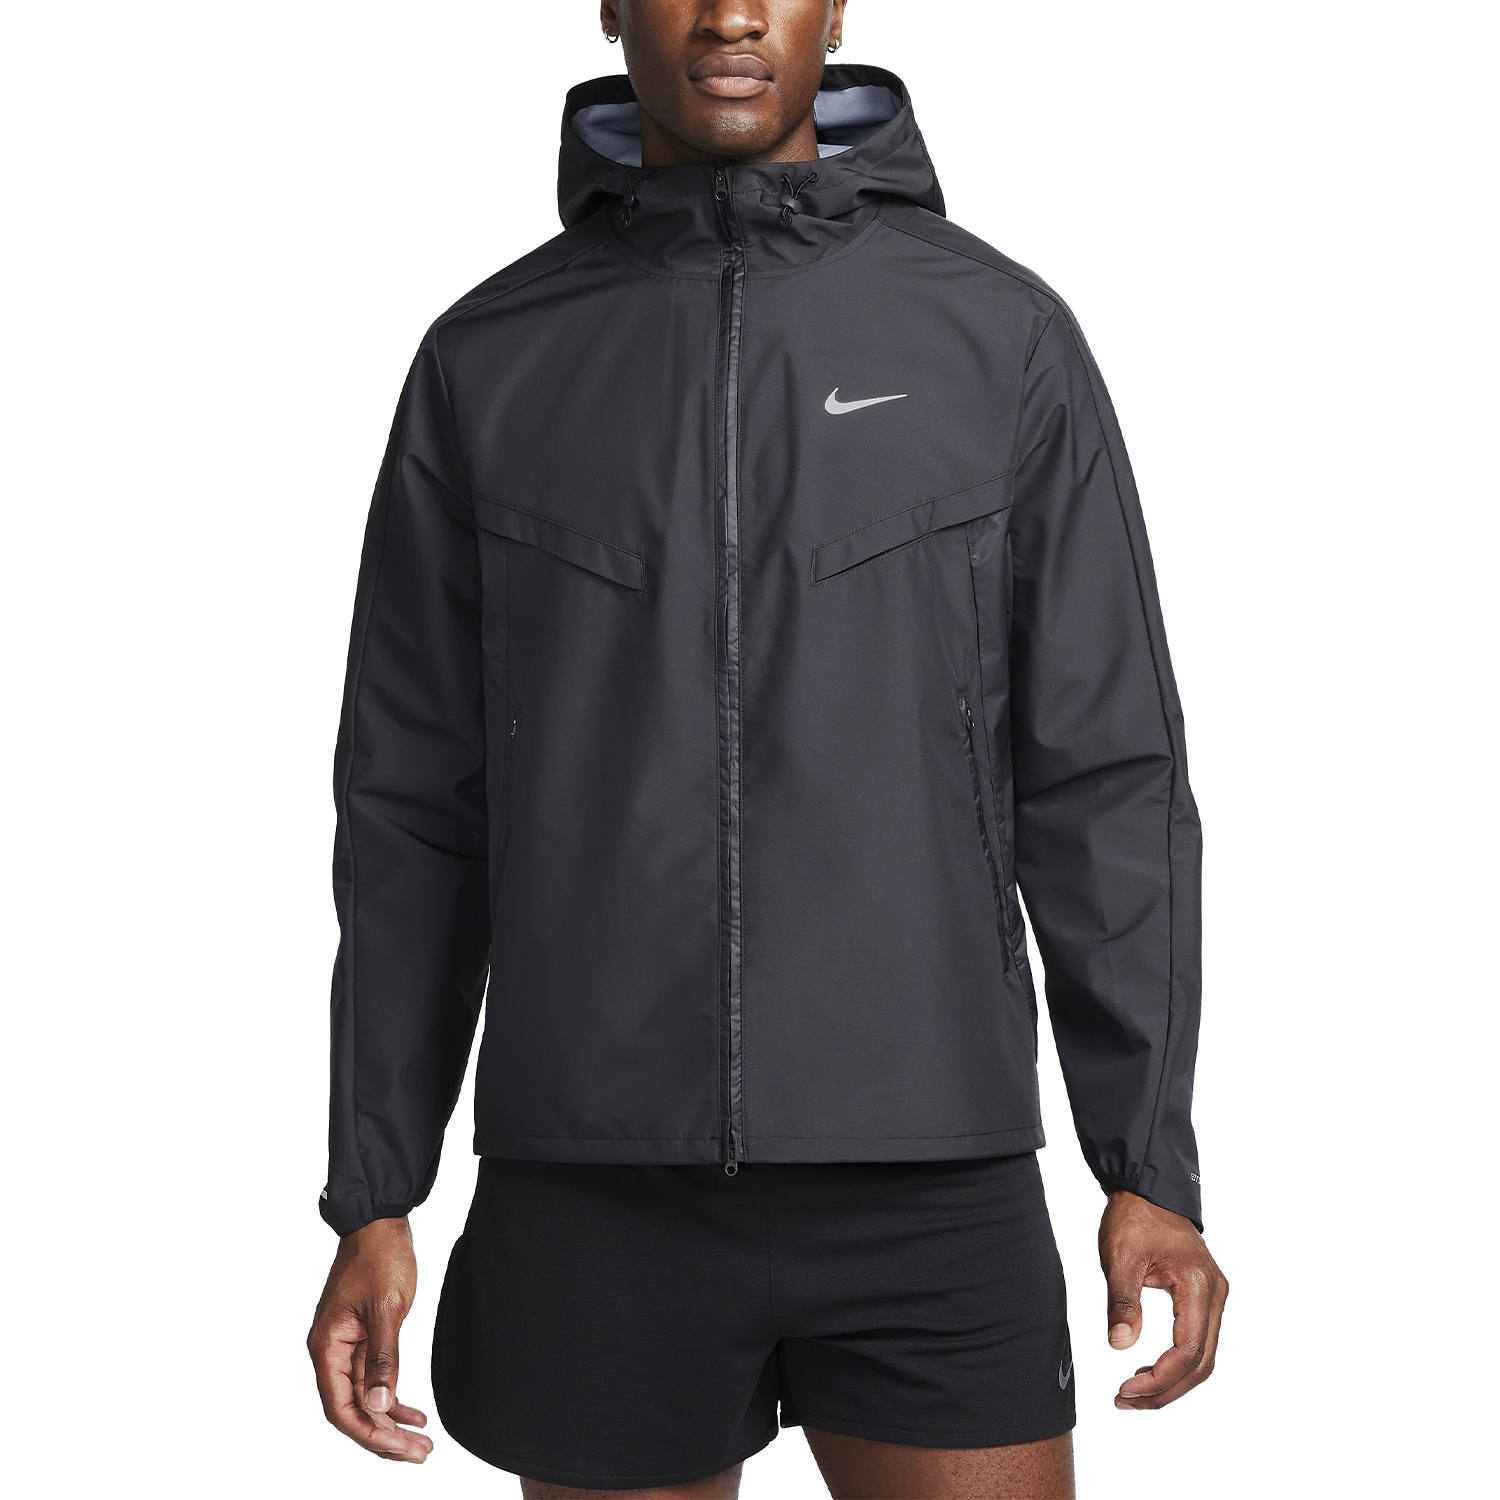 Nike Storm-FIT Windrunner Jacket - Black/Reflective Silver